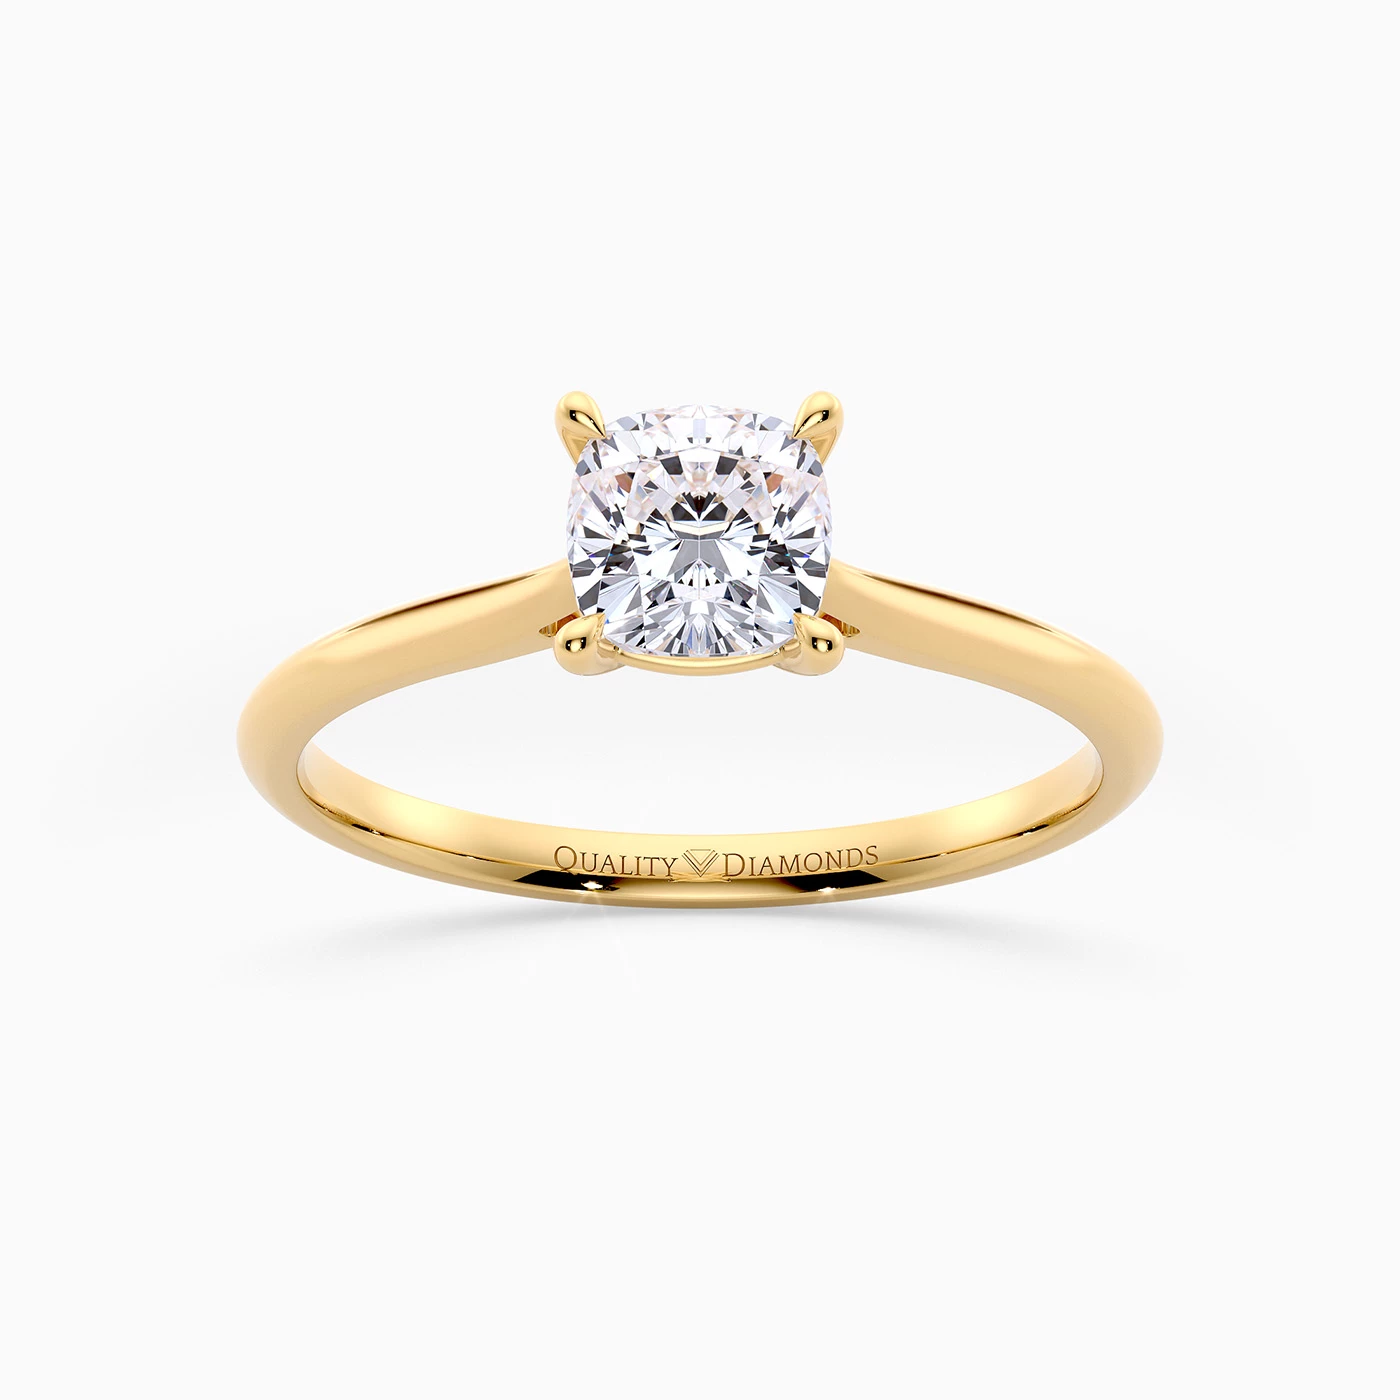 Cushion Carys Diamond Ring in 18K Yellow Gold